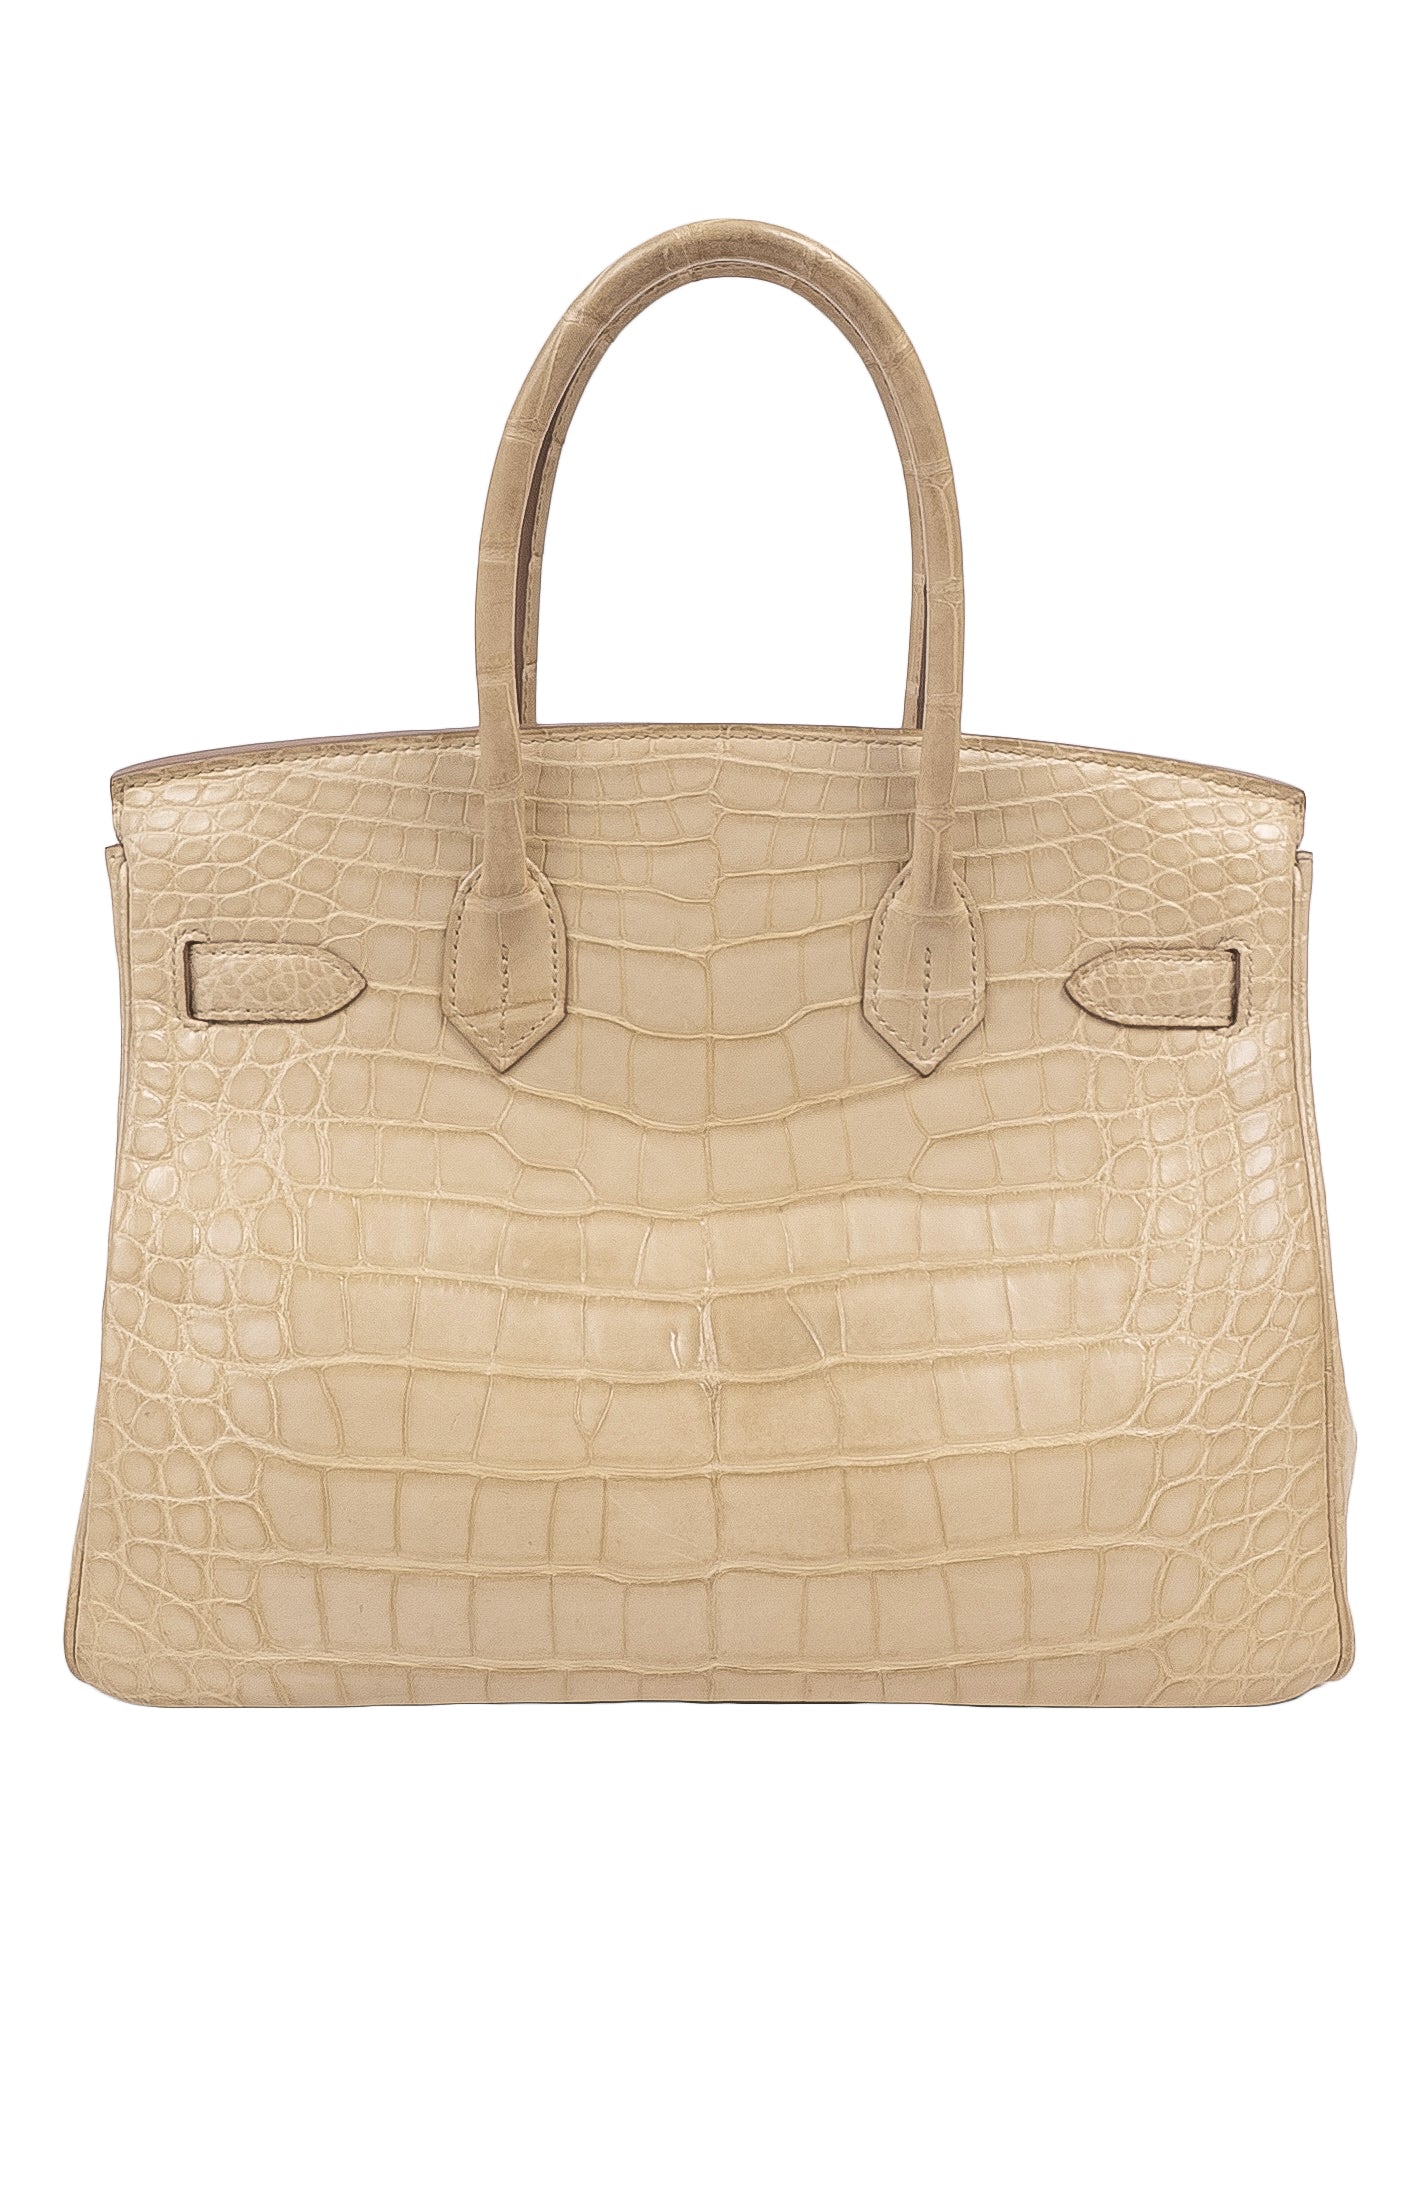 Hermès Birkin Handbag 367431